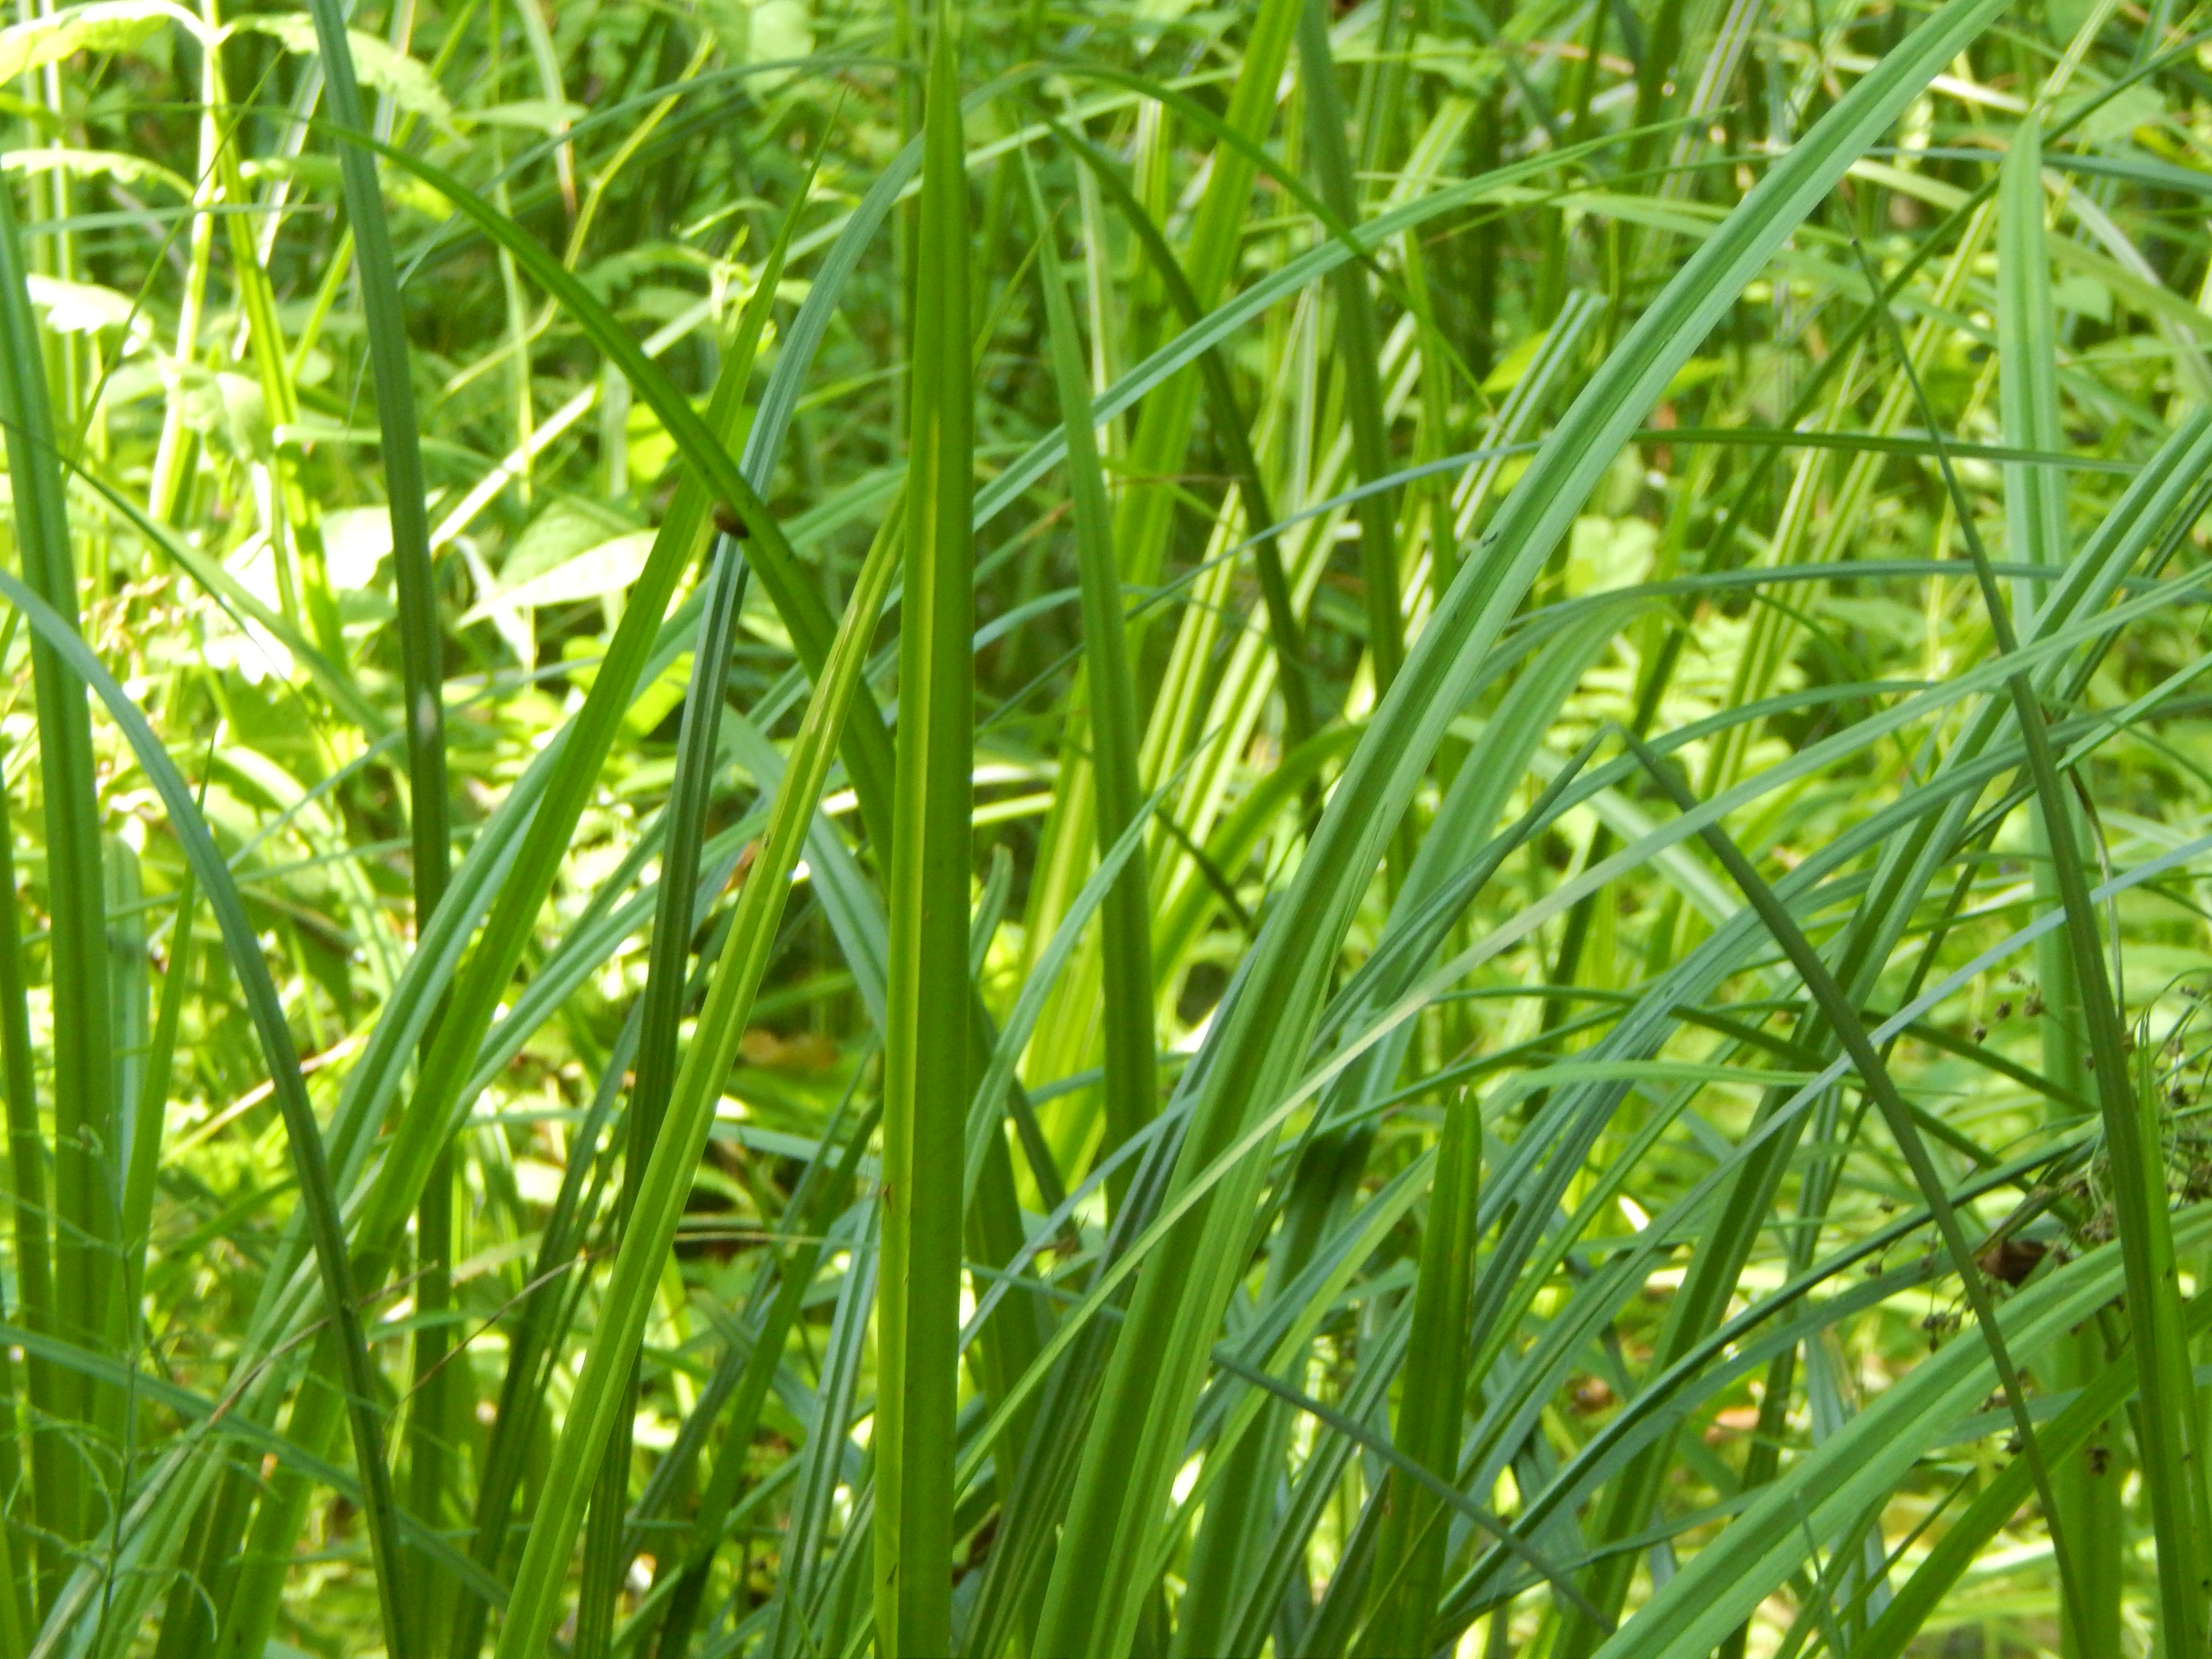 Tall Green Grass Texture - Free Stock Photo by Oleg Prokopenko on ...